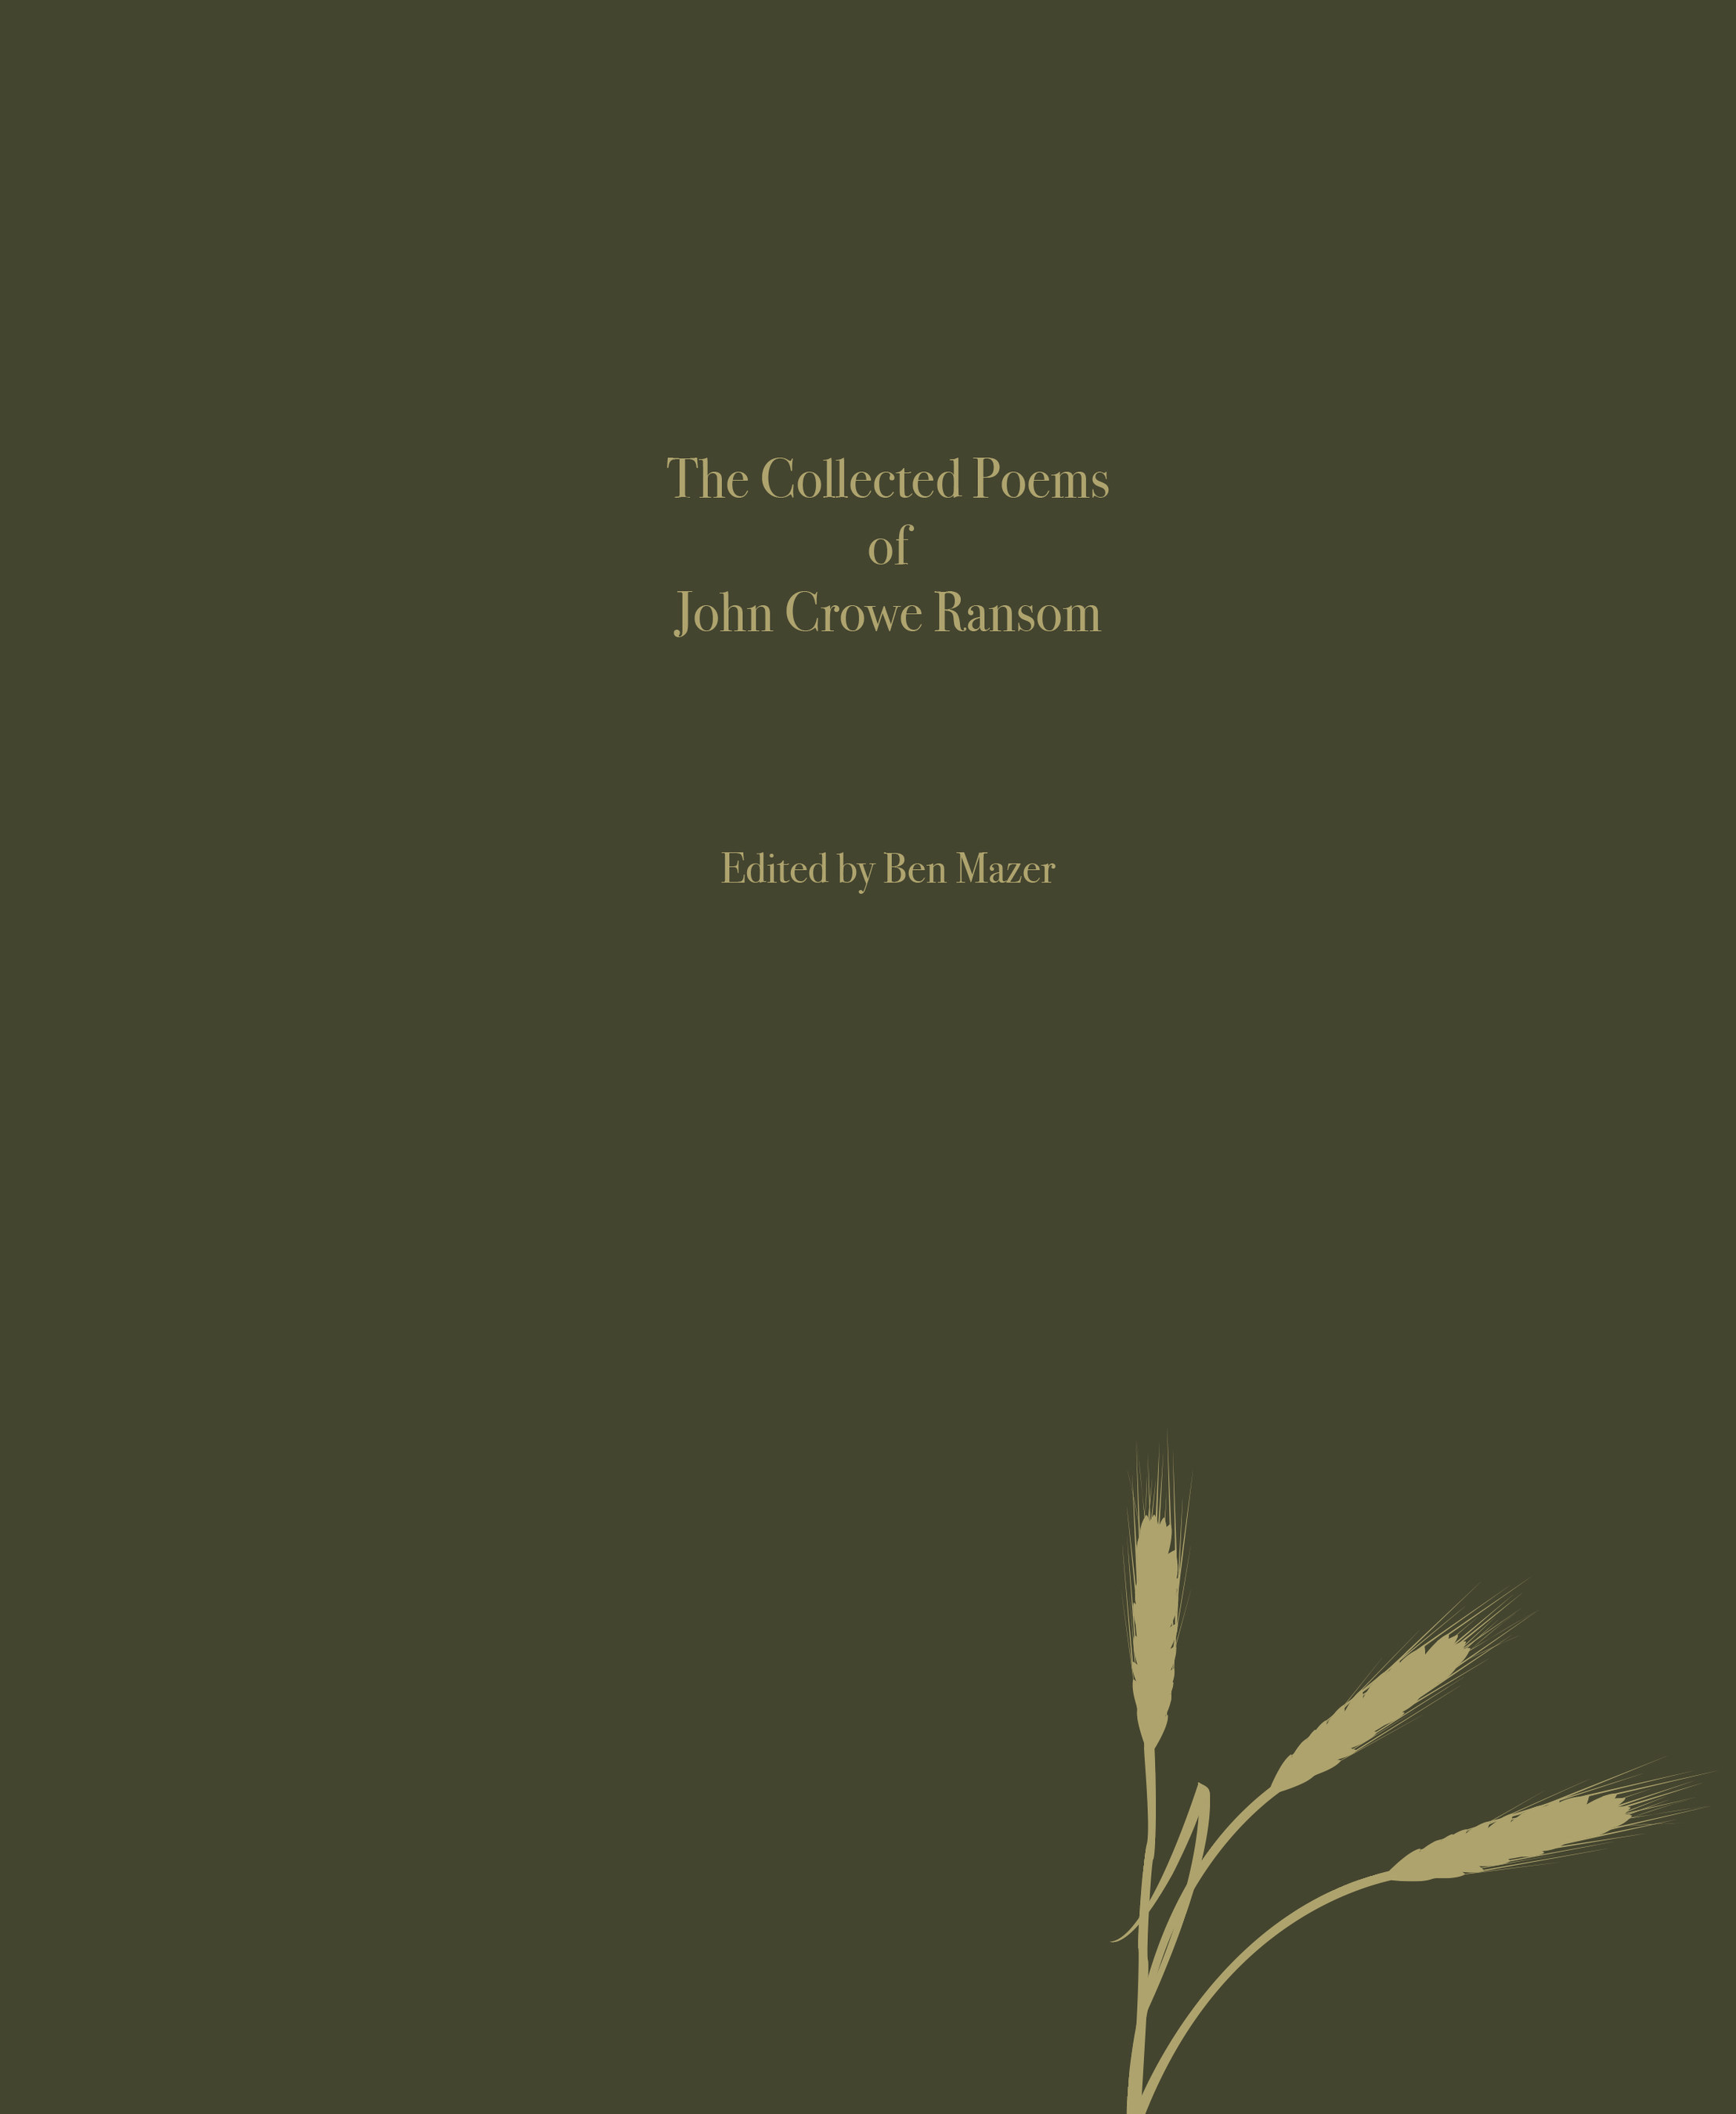 Collected Poems of John Crowe Ransom edited by Ben Mazer (Un-Gyve Press). (PRNewsFoto/Un-Gyve Press)